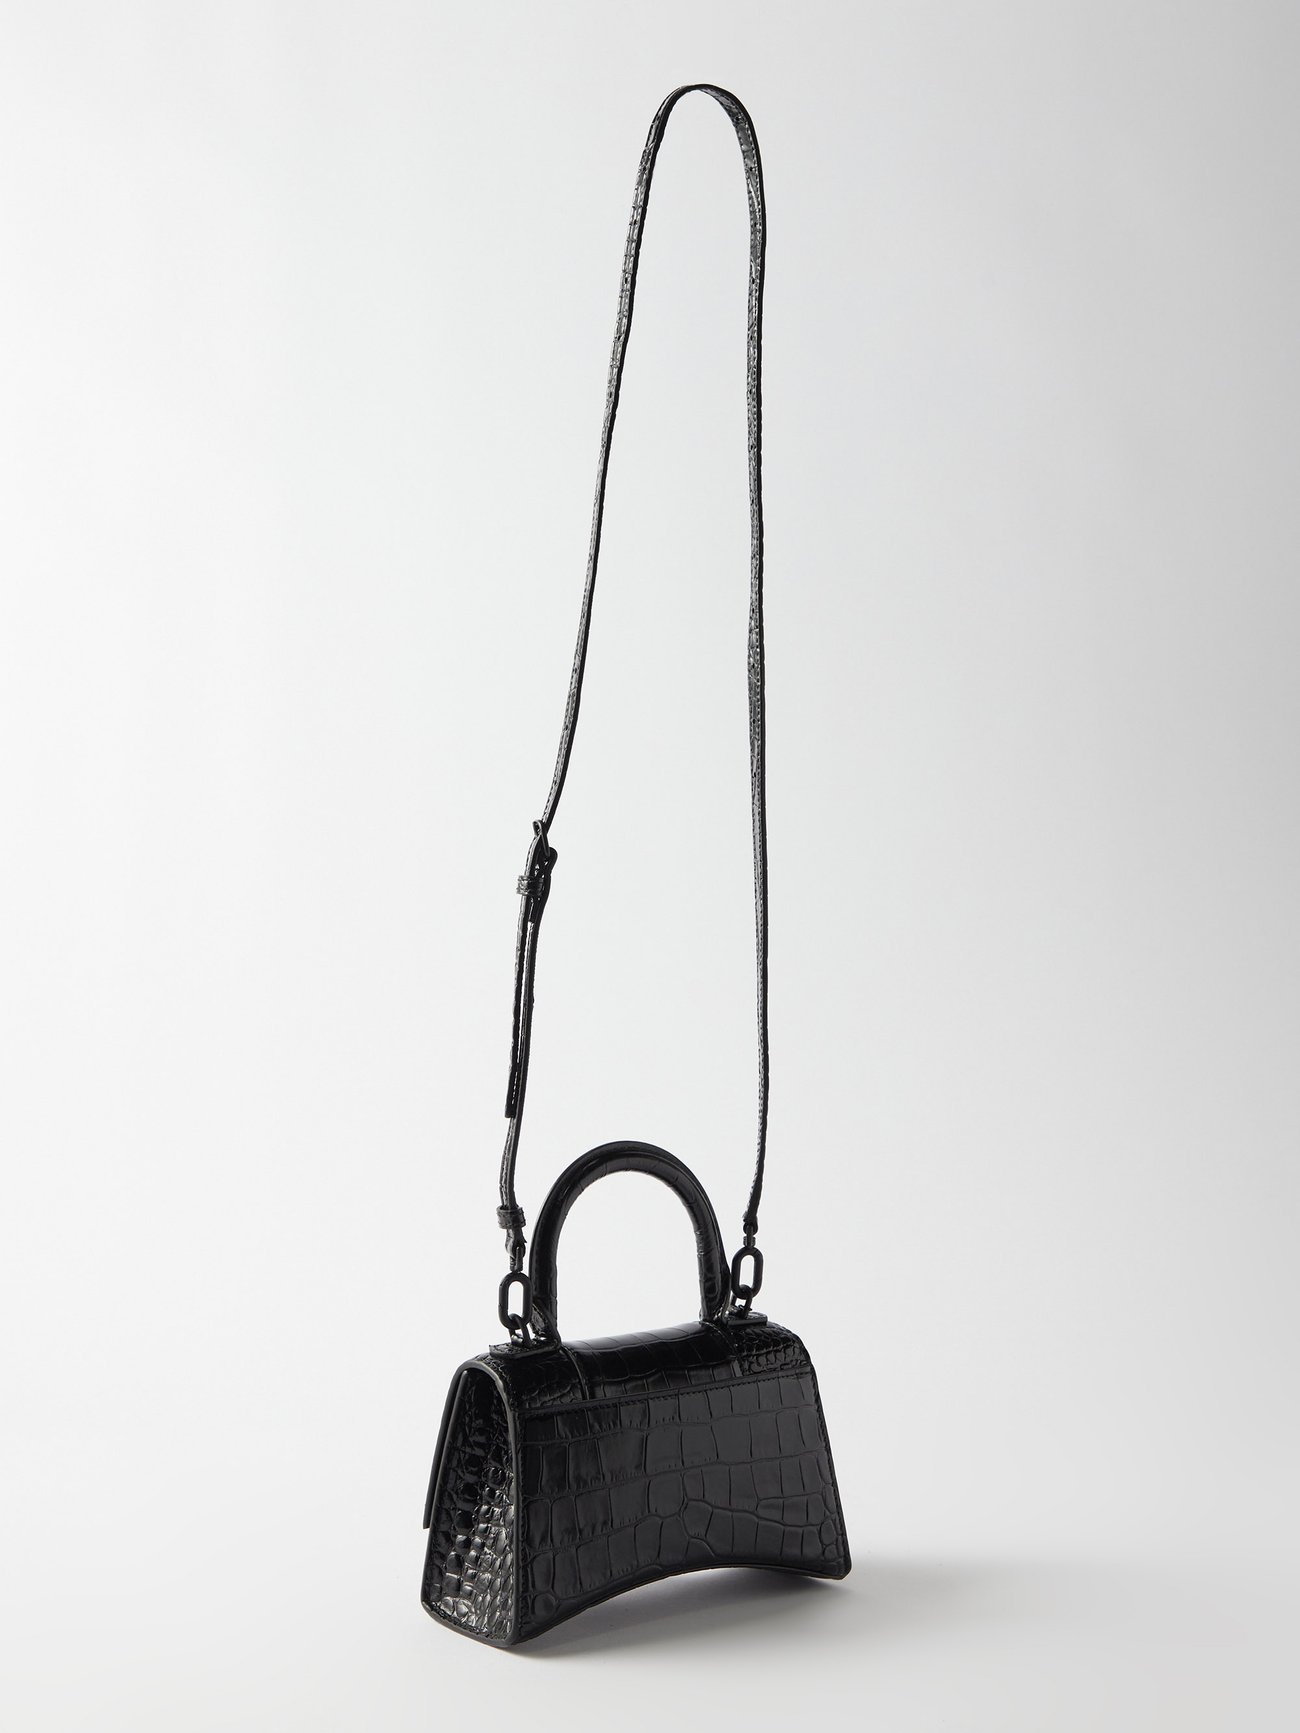 Balenciaga Crocodile Effect Tote Bag - Black for Women